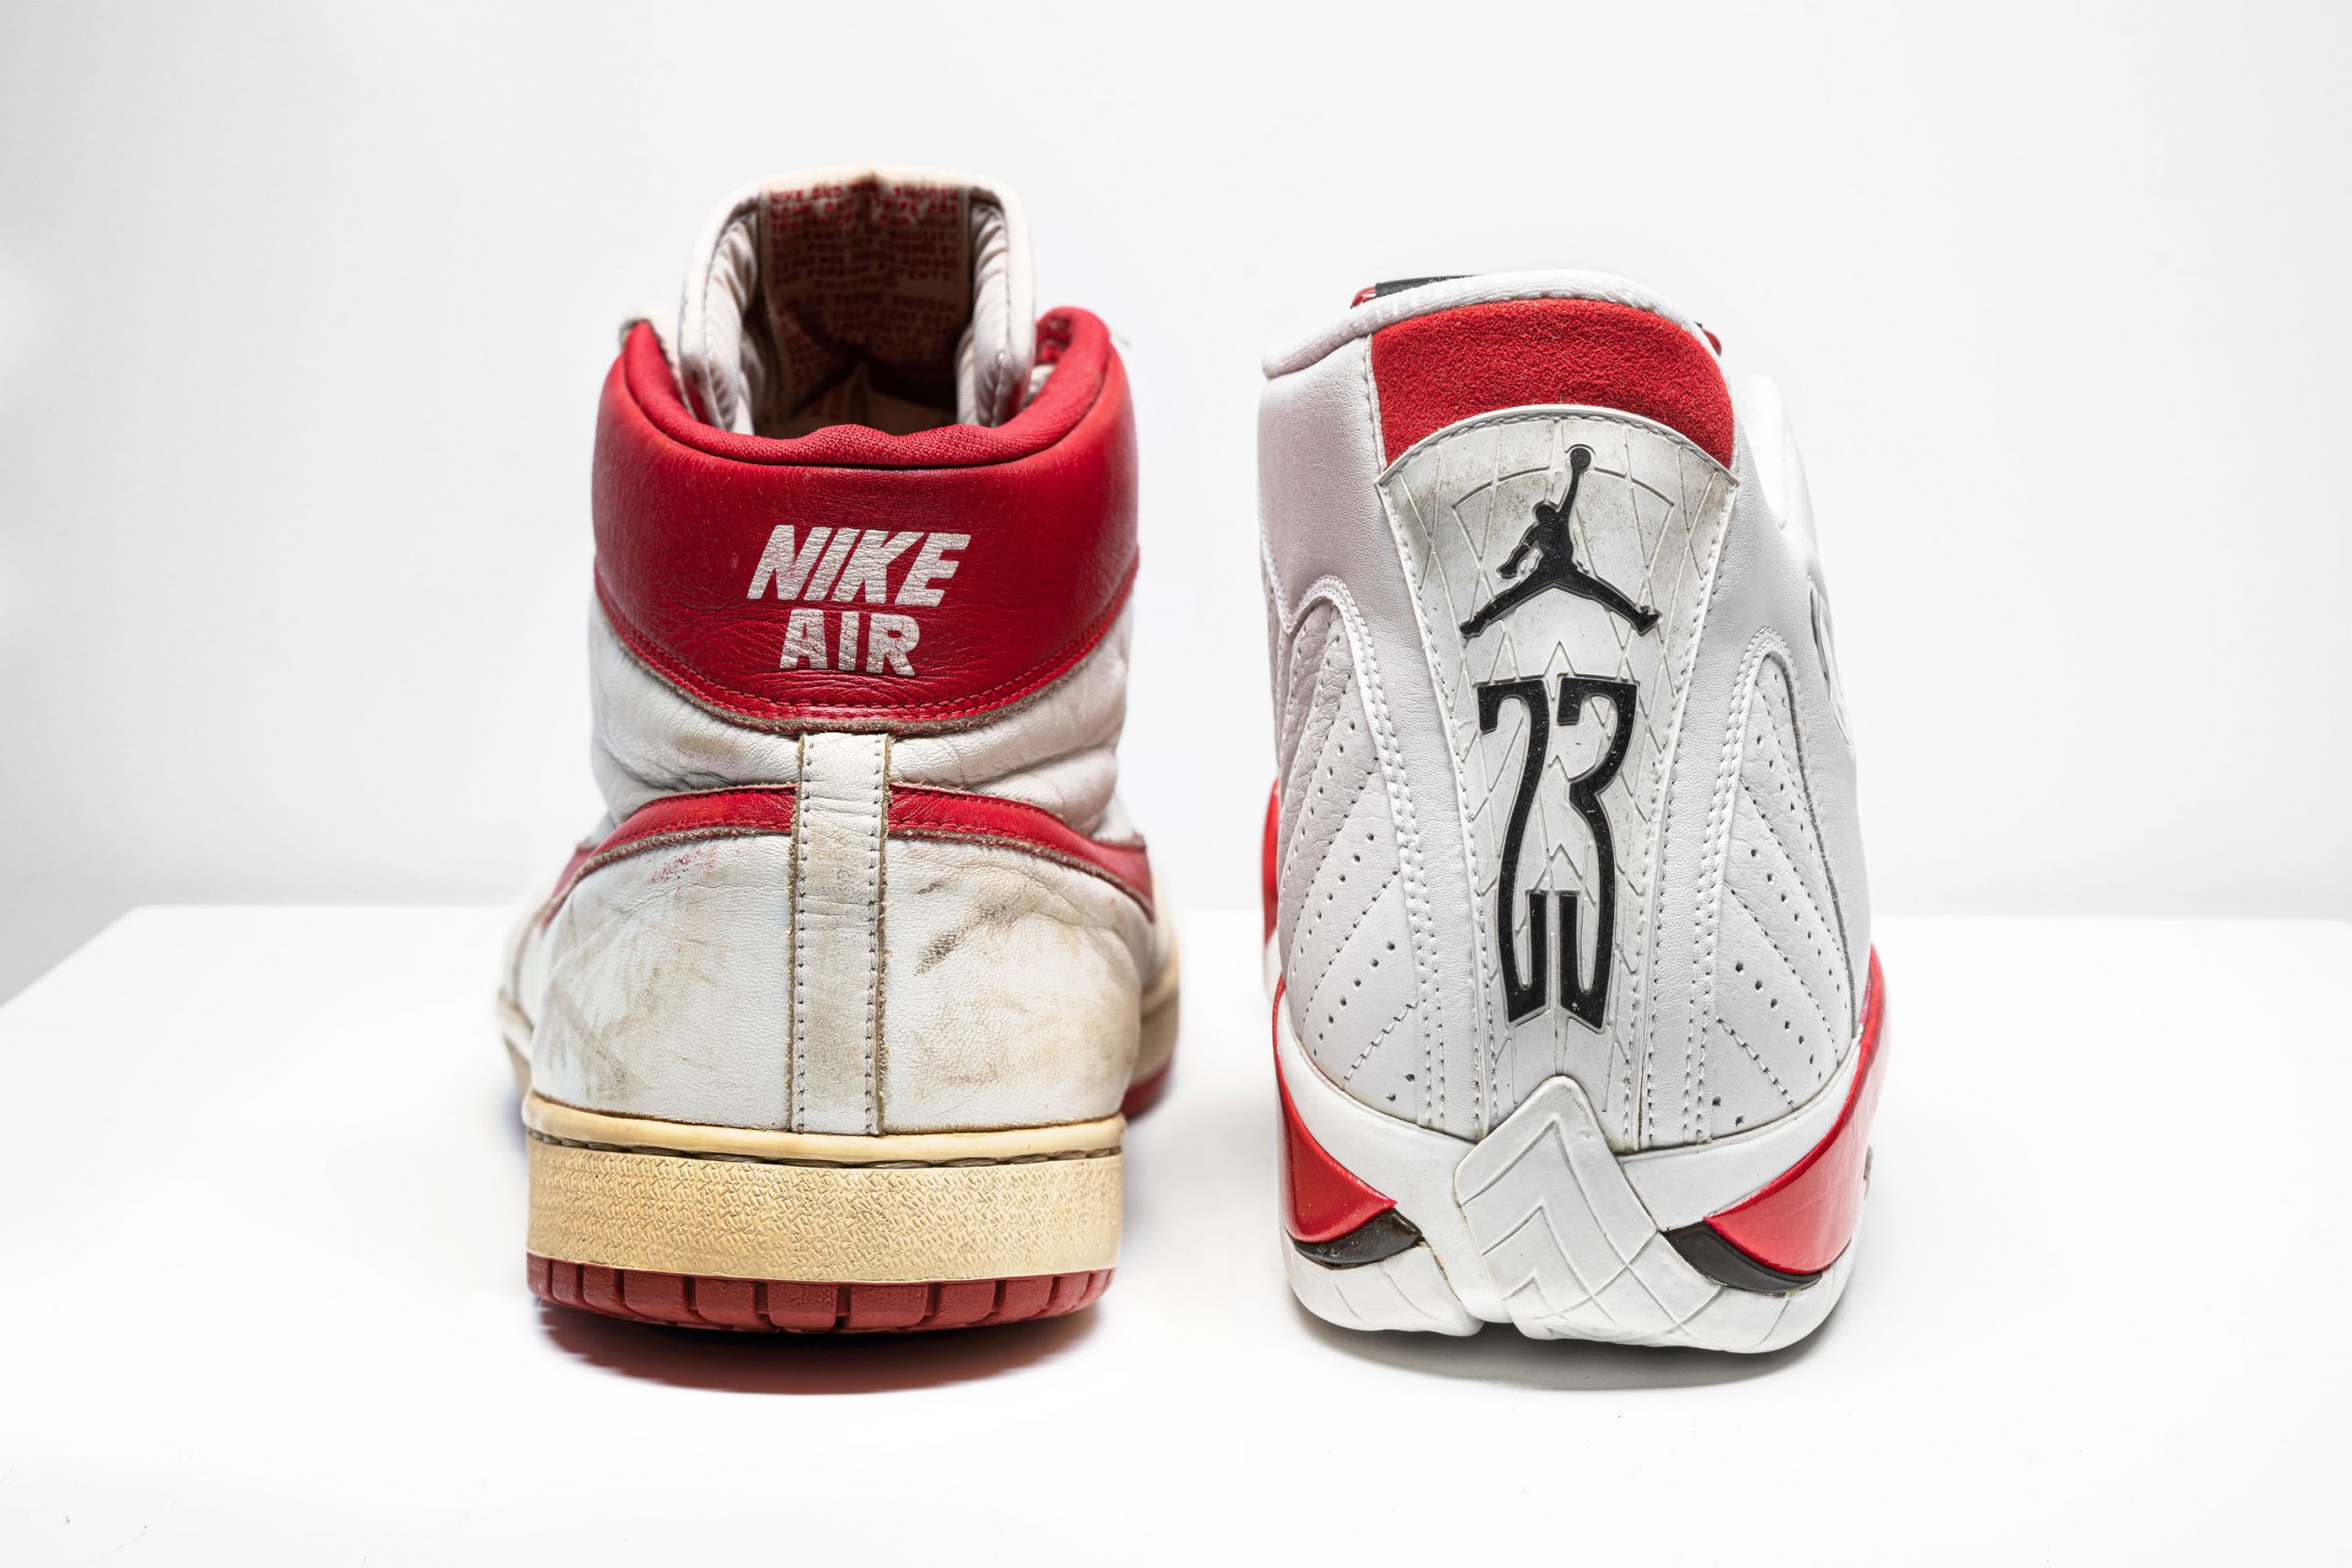 Christies to auction rare Michael Jordan sneakers